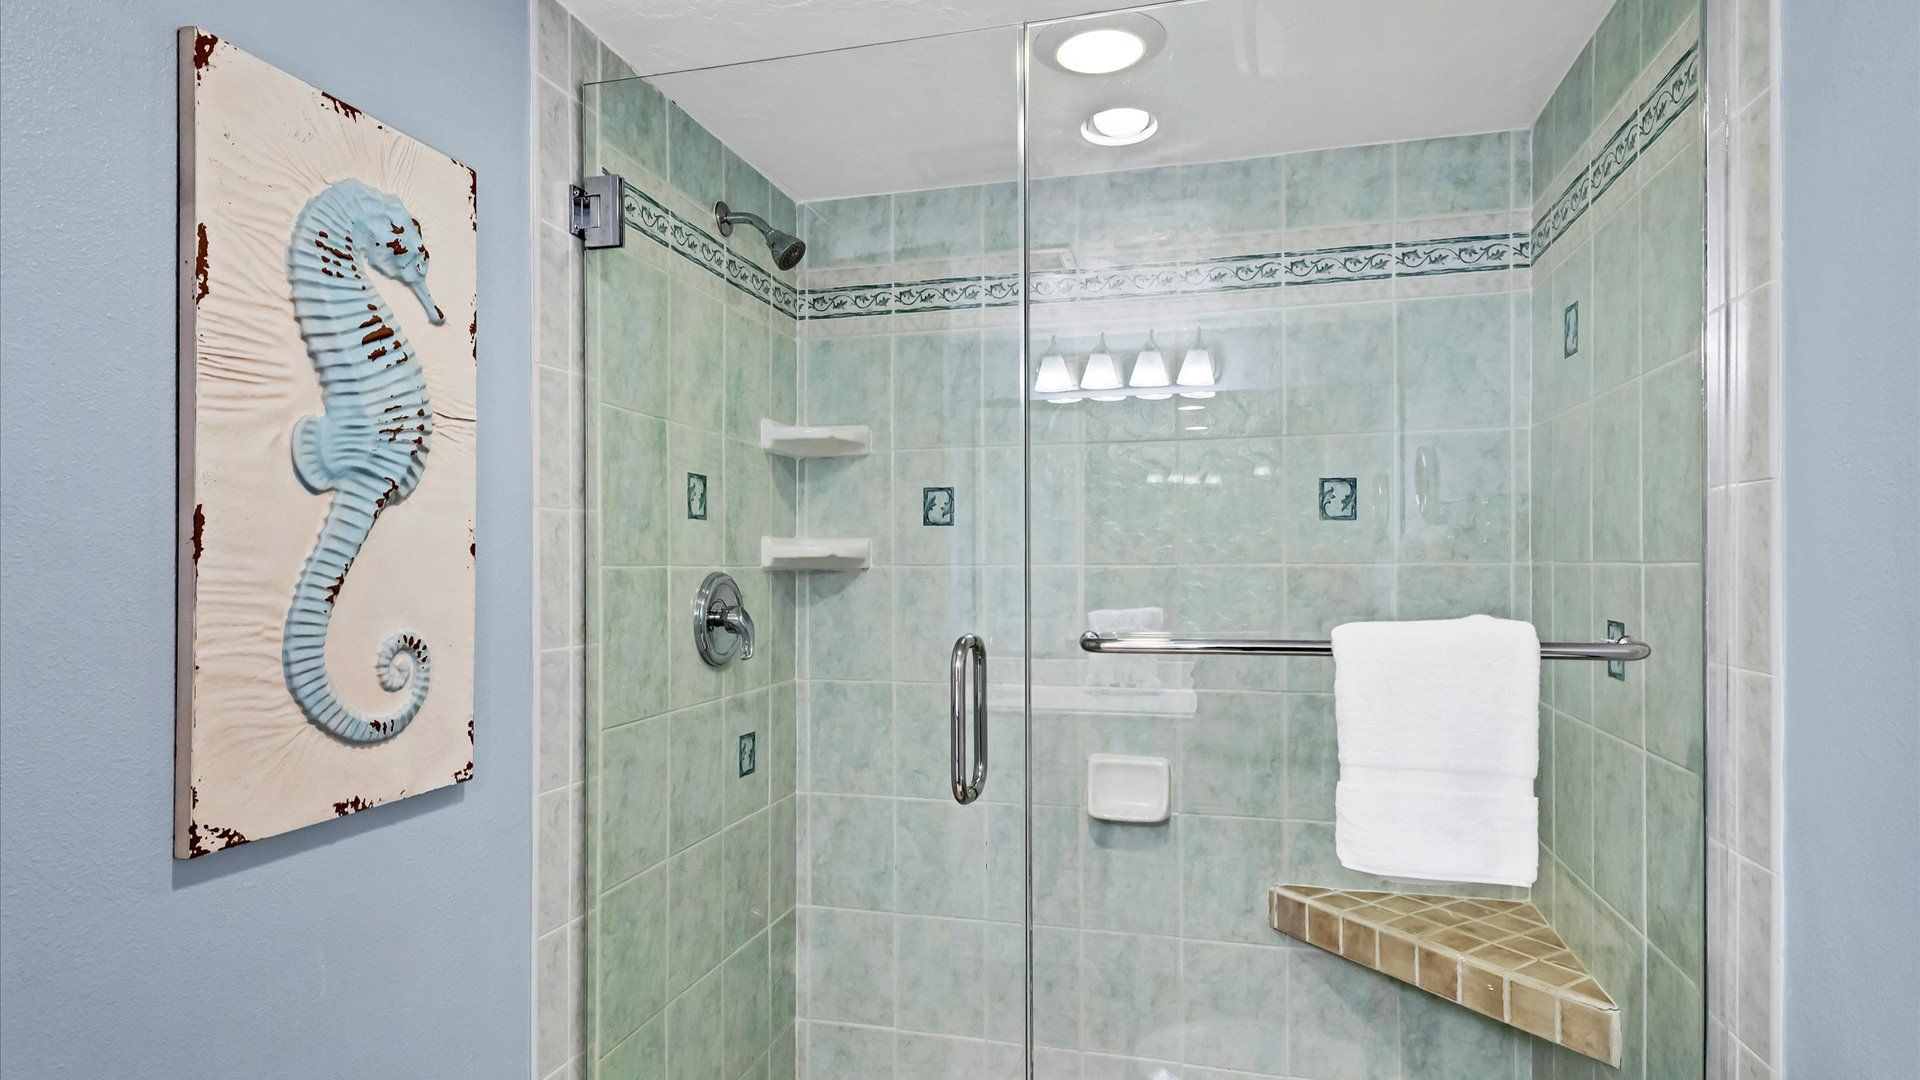 Master Bathroom (Angle)
Walk-In Shower